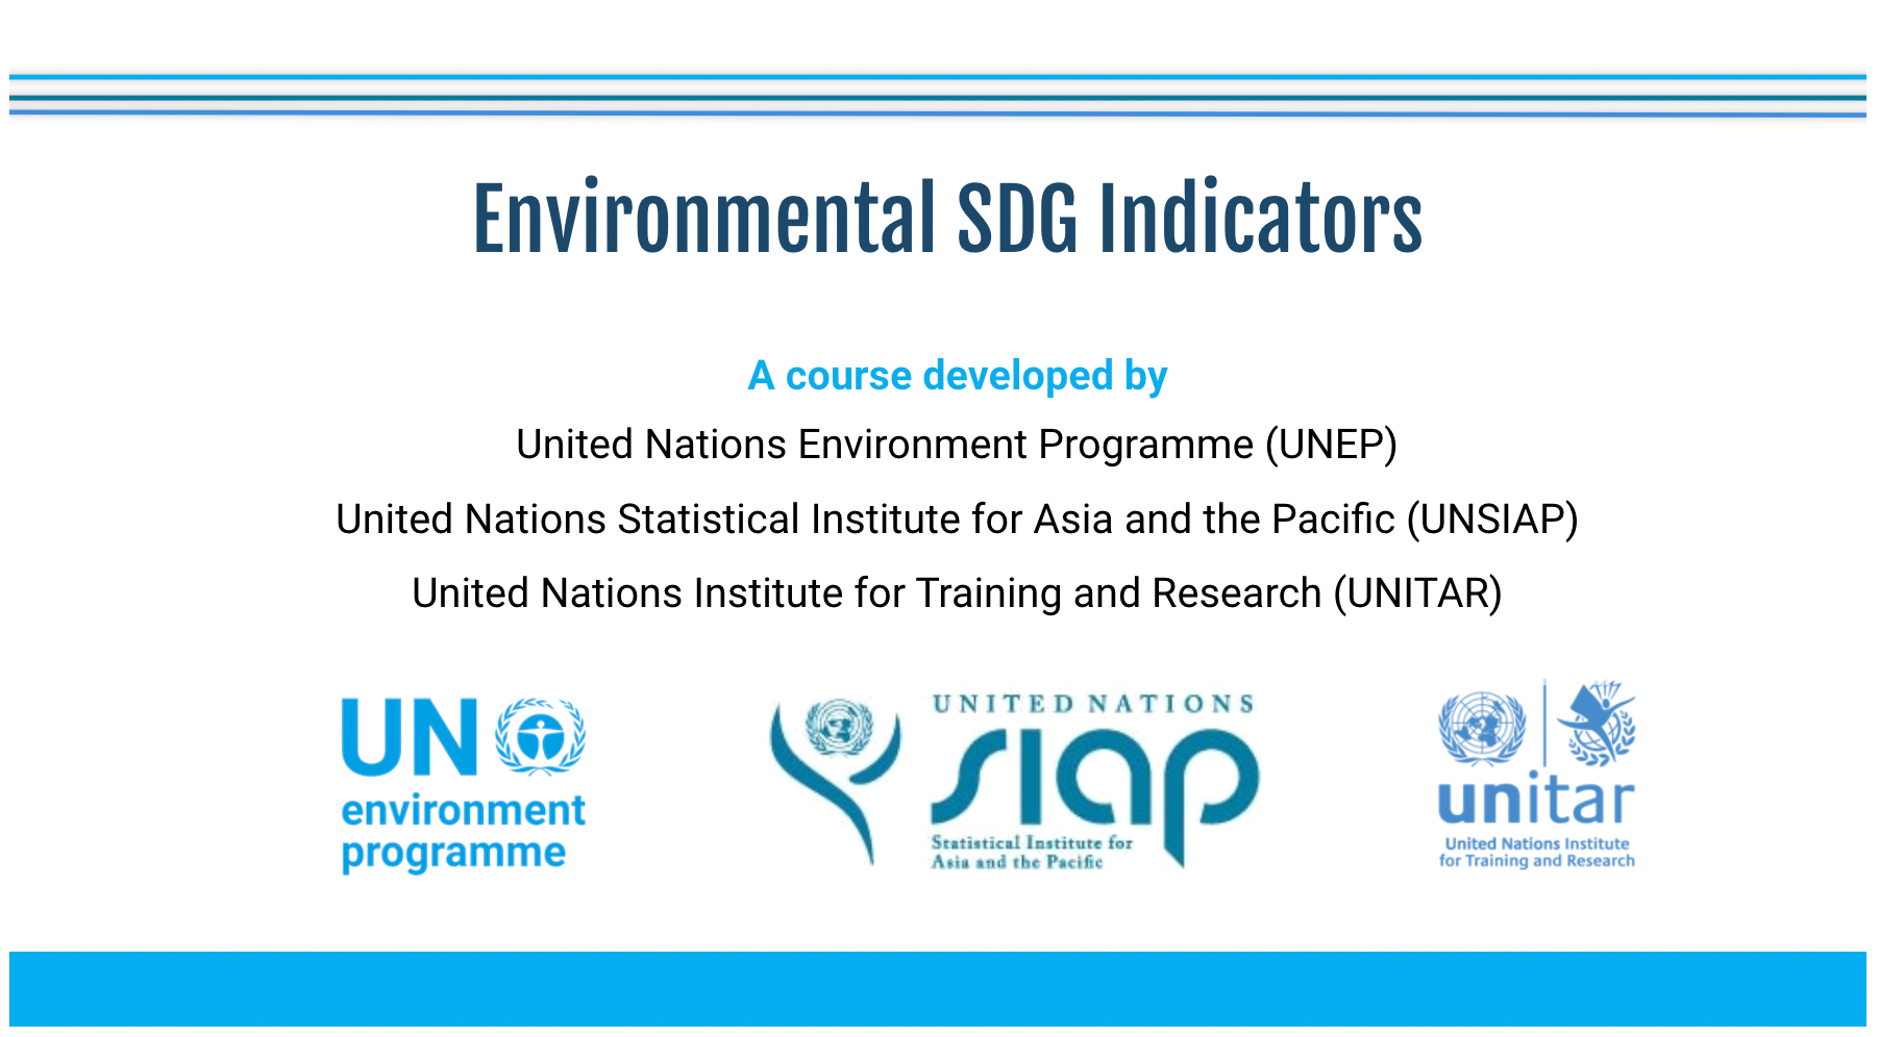 Environmental SDG indicators